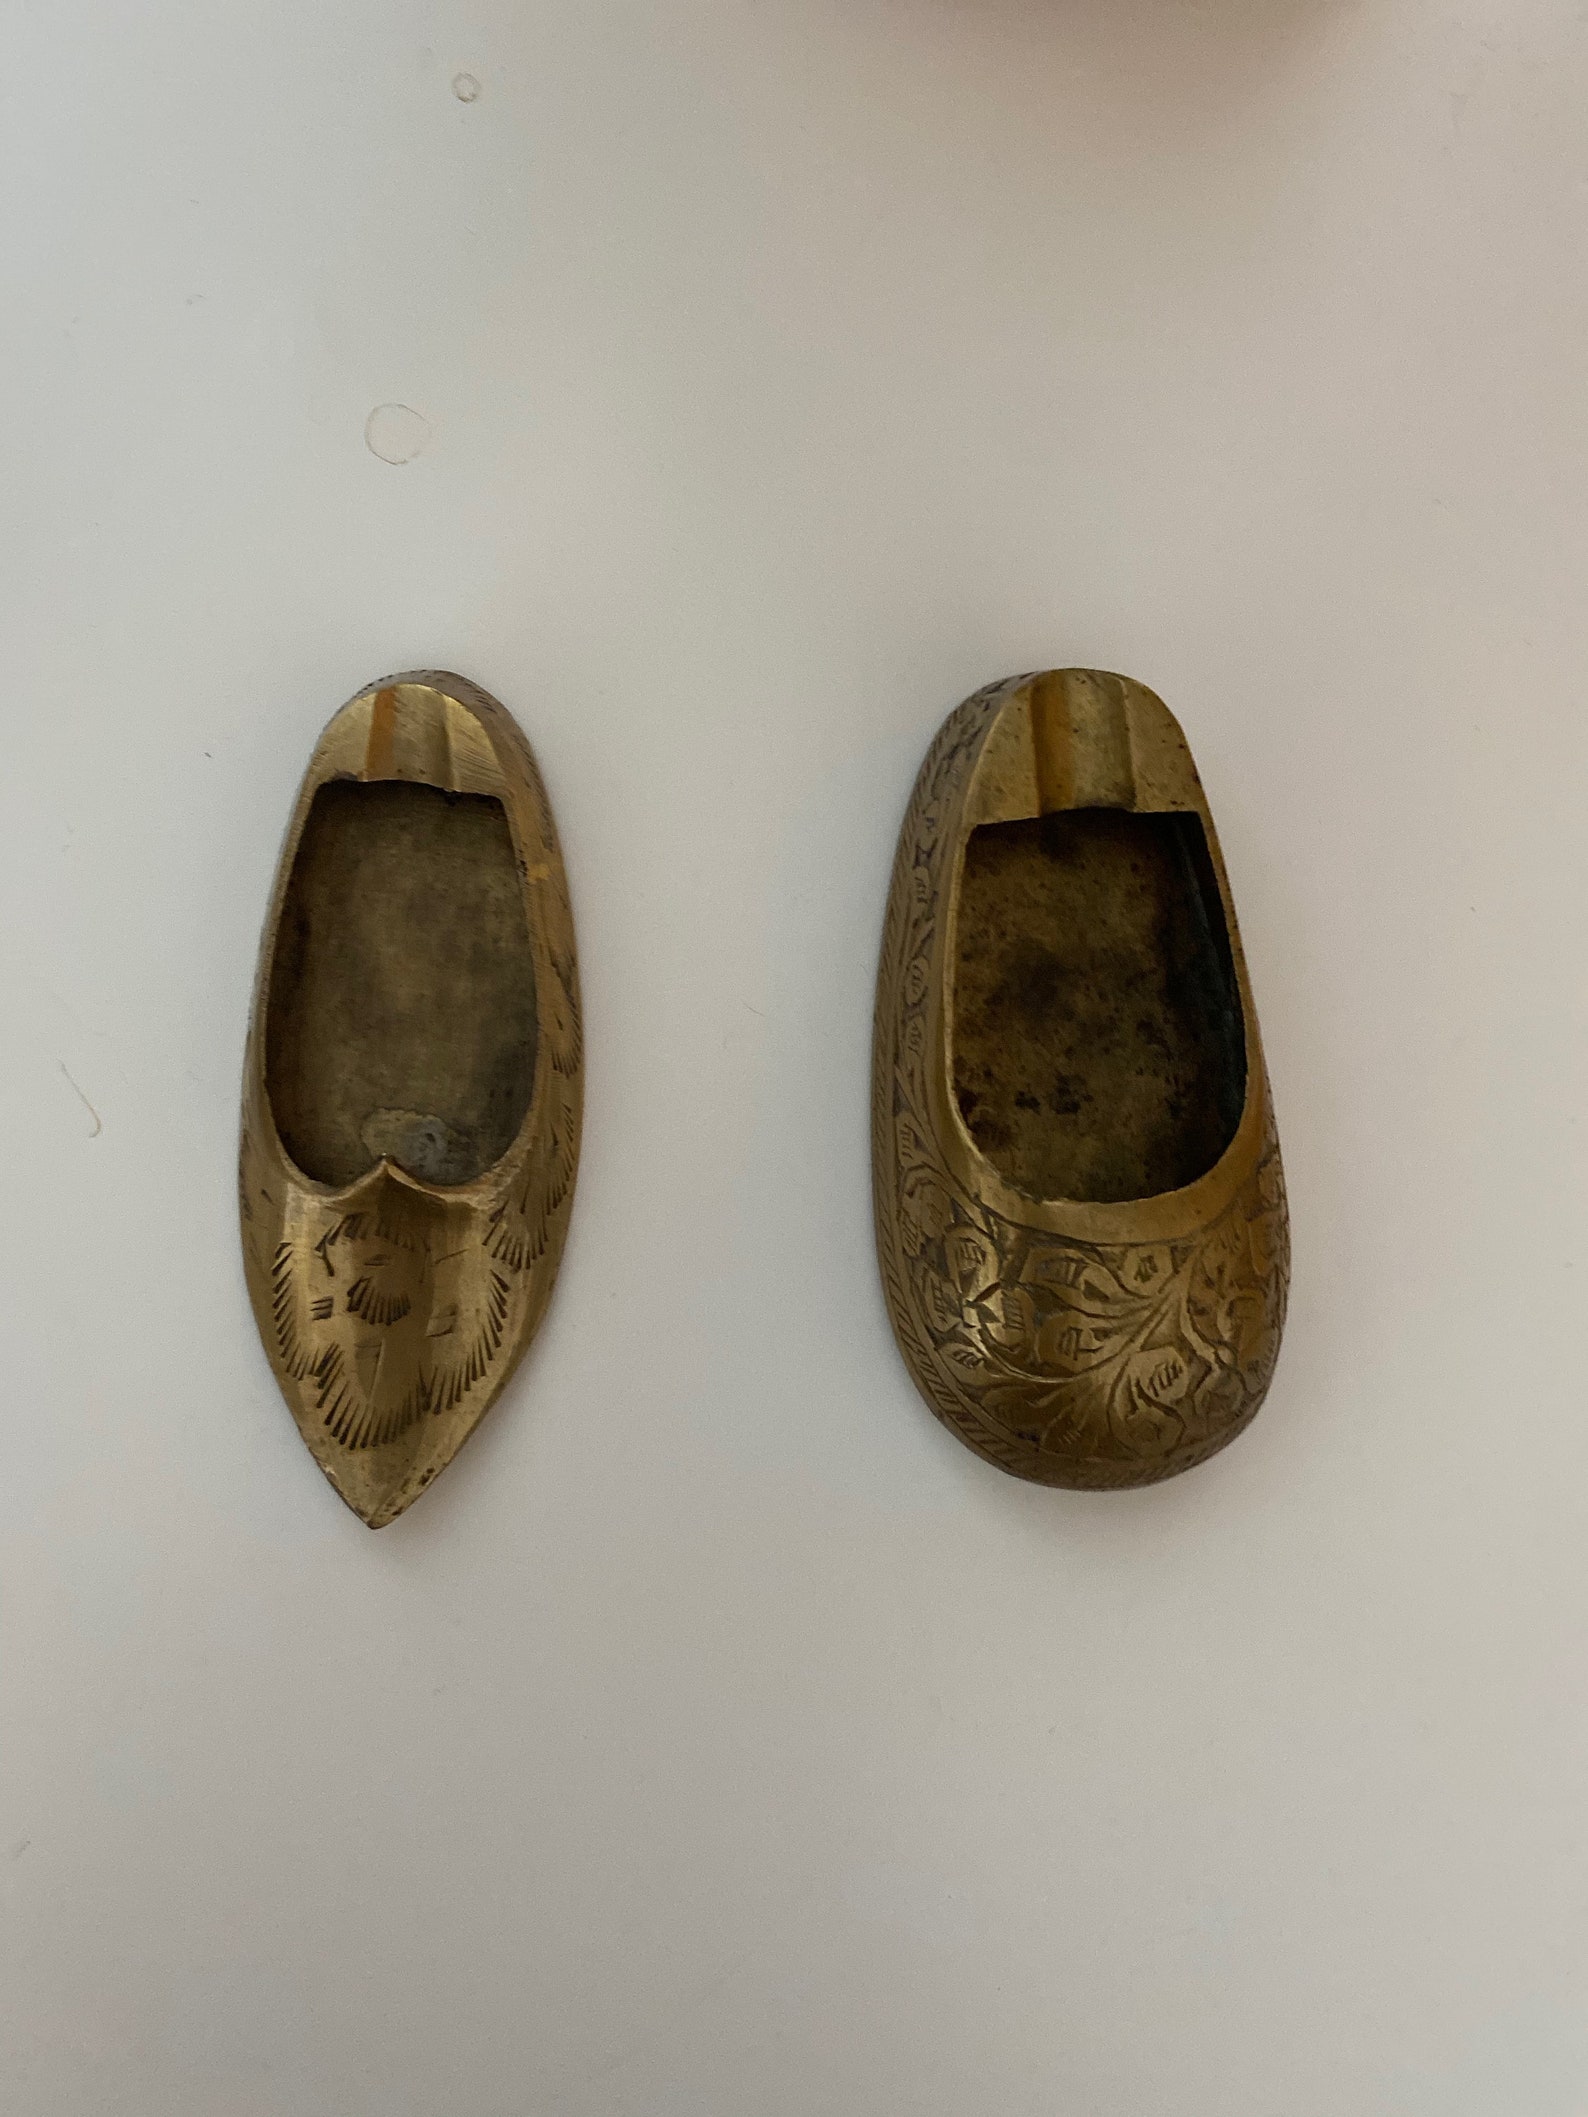 Pair of Brass Shoe Ashtrays Mid Century Modern Brass Ashtray | Etsy